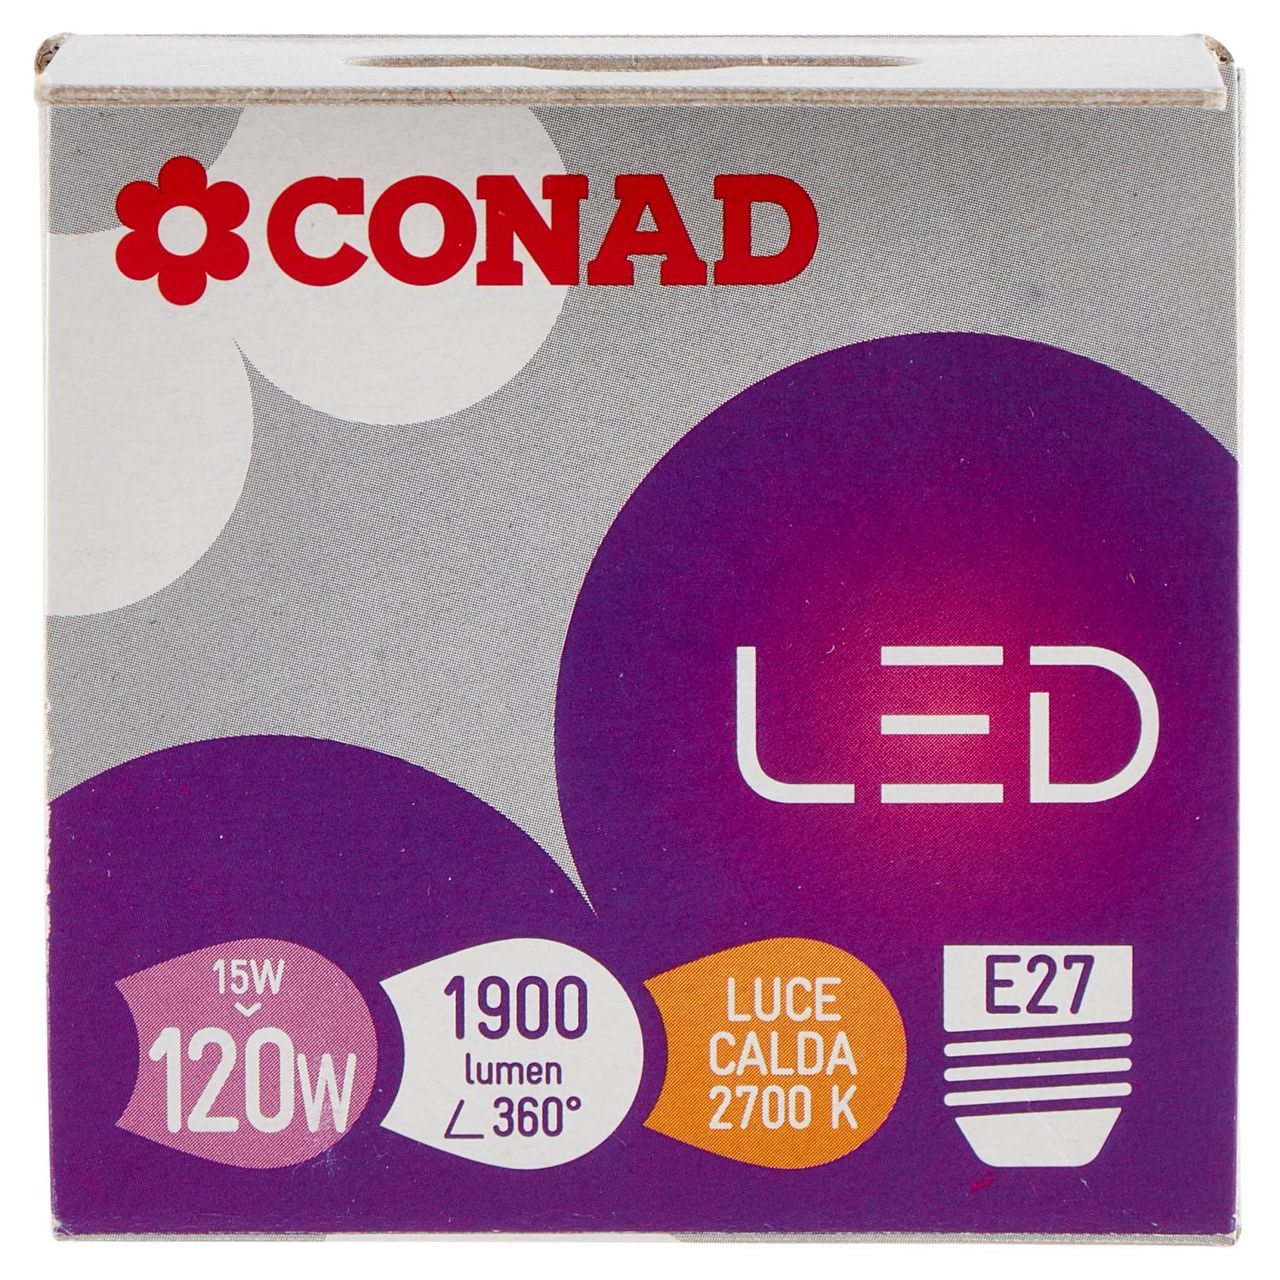 CONAD Led 15W 1900 Lumen E27 Luce Calda